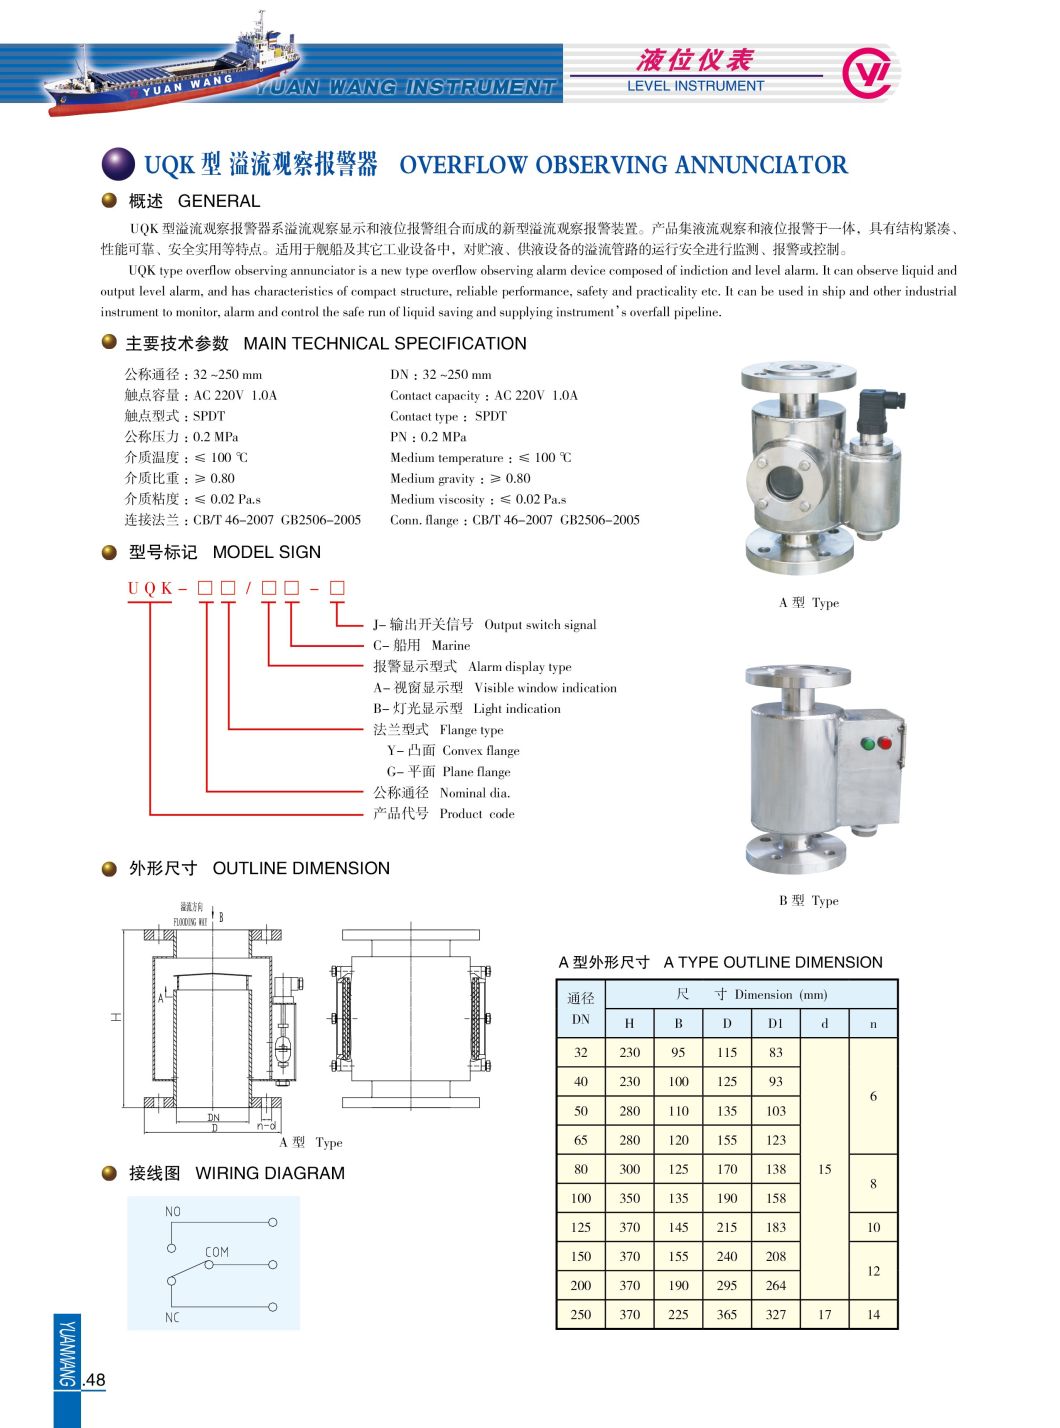 Factory Ss Stainless Steel Marine Pressure Sensor Water Pressure Transmitter